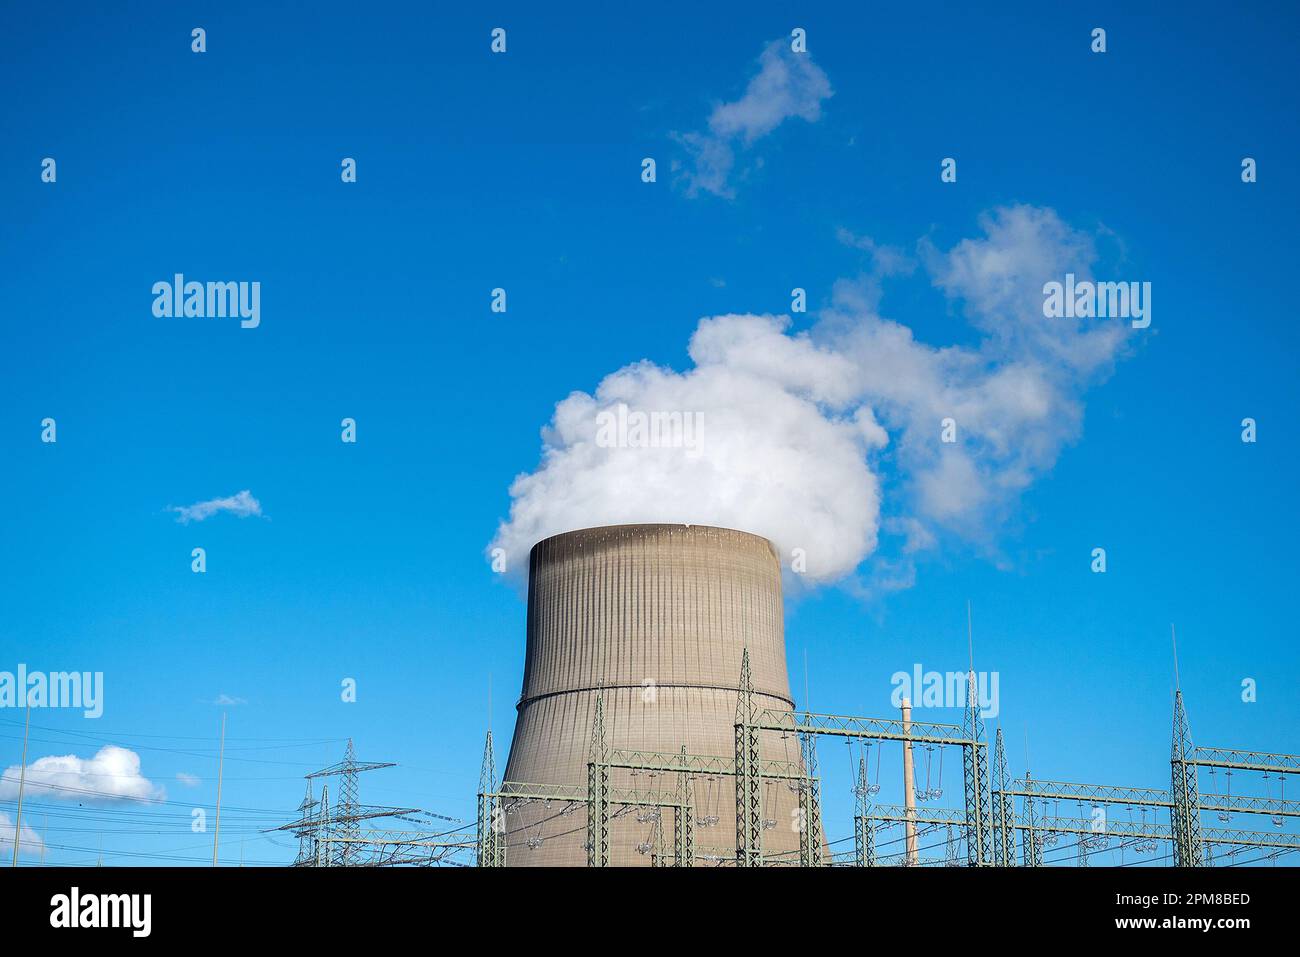 Atomkraftwerk in Lingen / RWE/  Emsland / Niedersachsen / Deutschland / nuclear power plant / npp / Germany Stock Photo